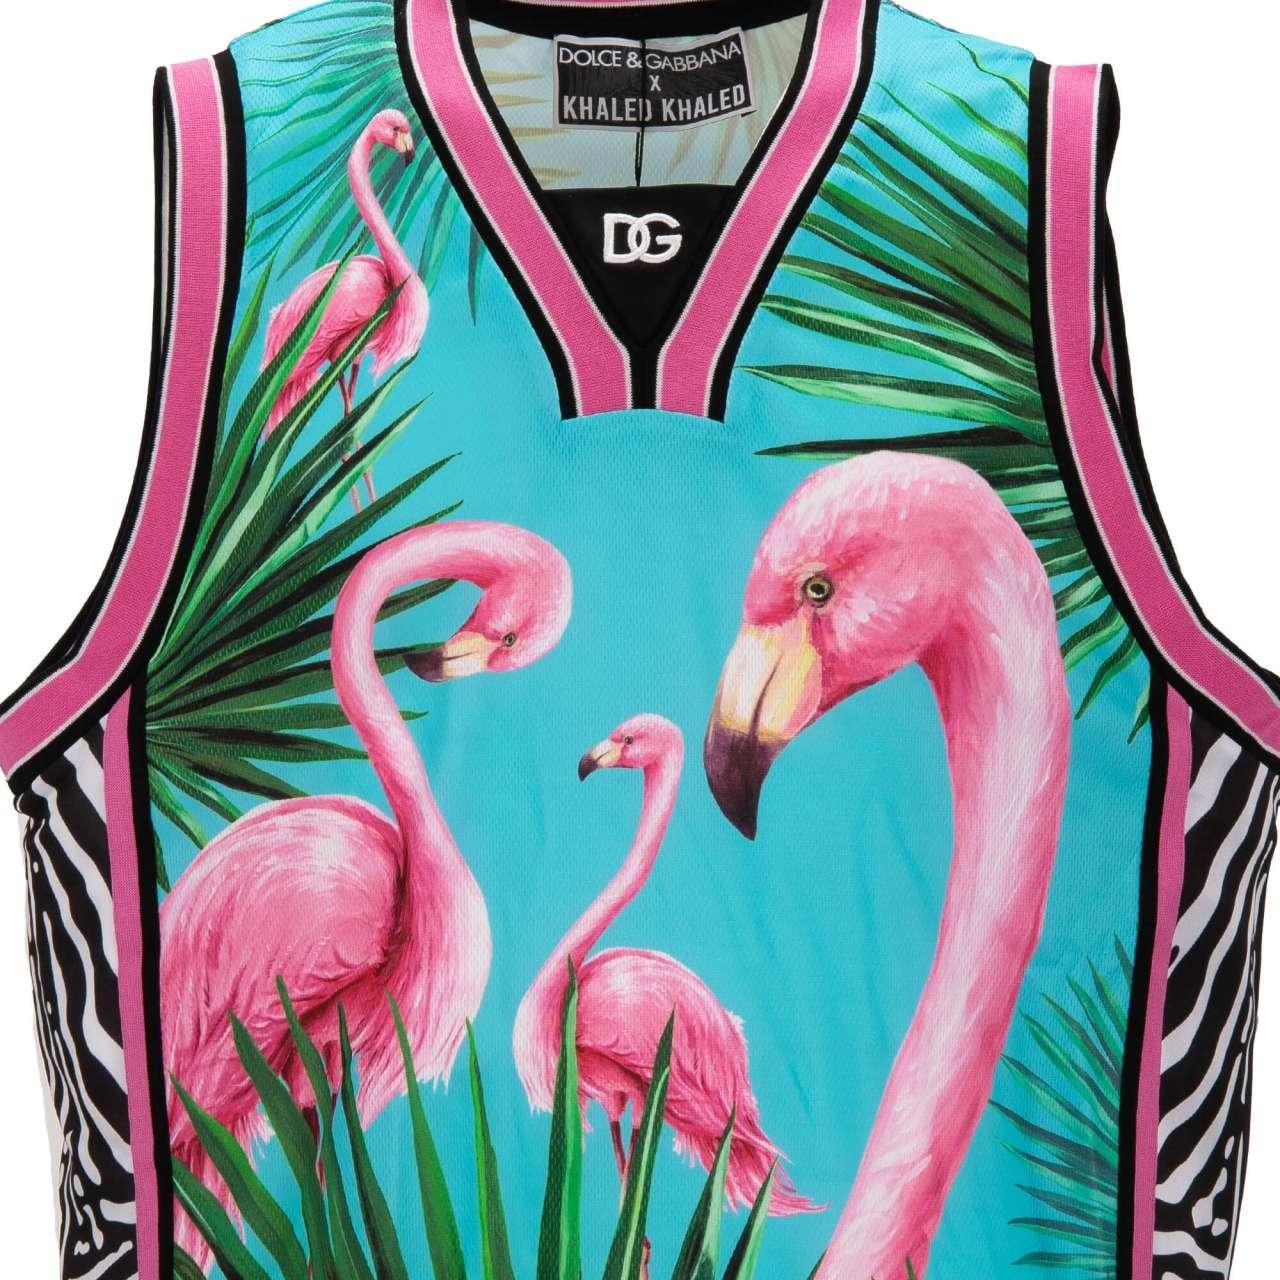 D&G - DJ Khaled Oversize Rank Top with Flamingo Zebra Print Pink Blue 52 In Excellent Condition For Sale In Erkrath, DE